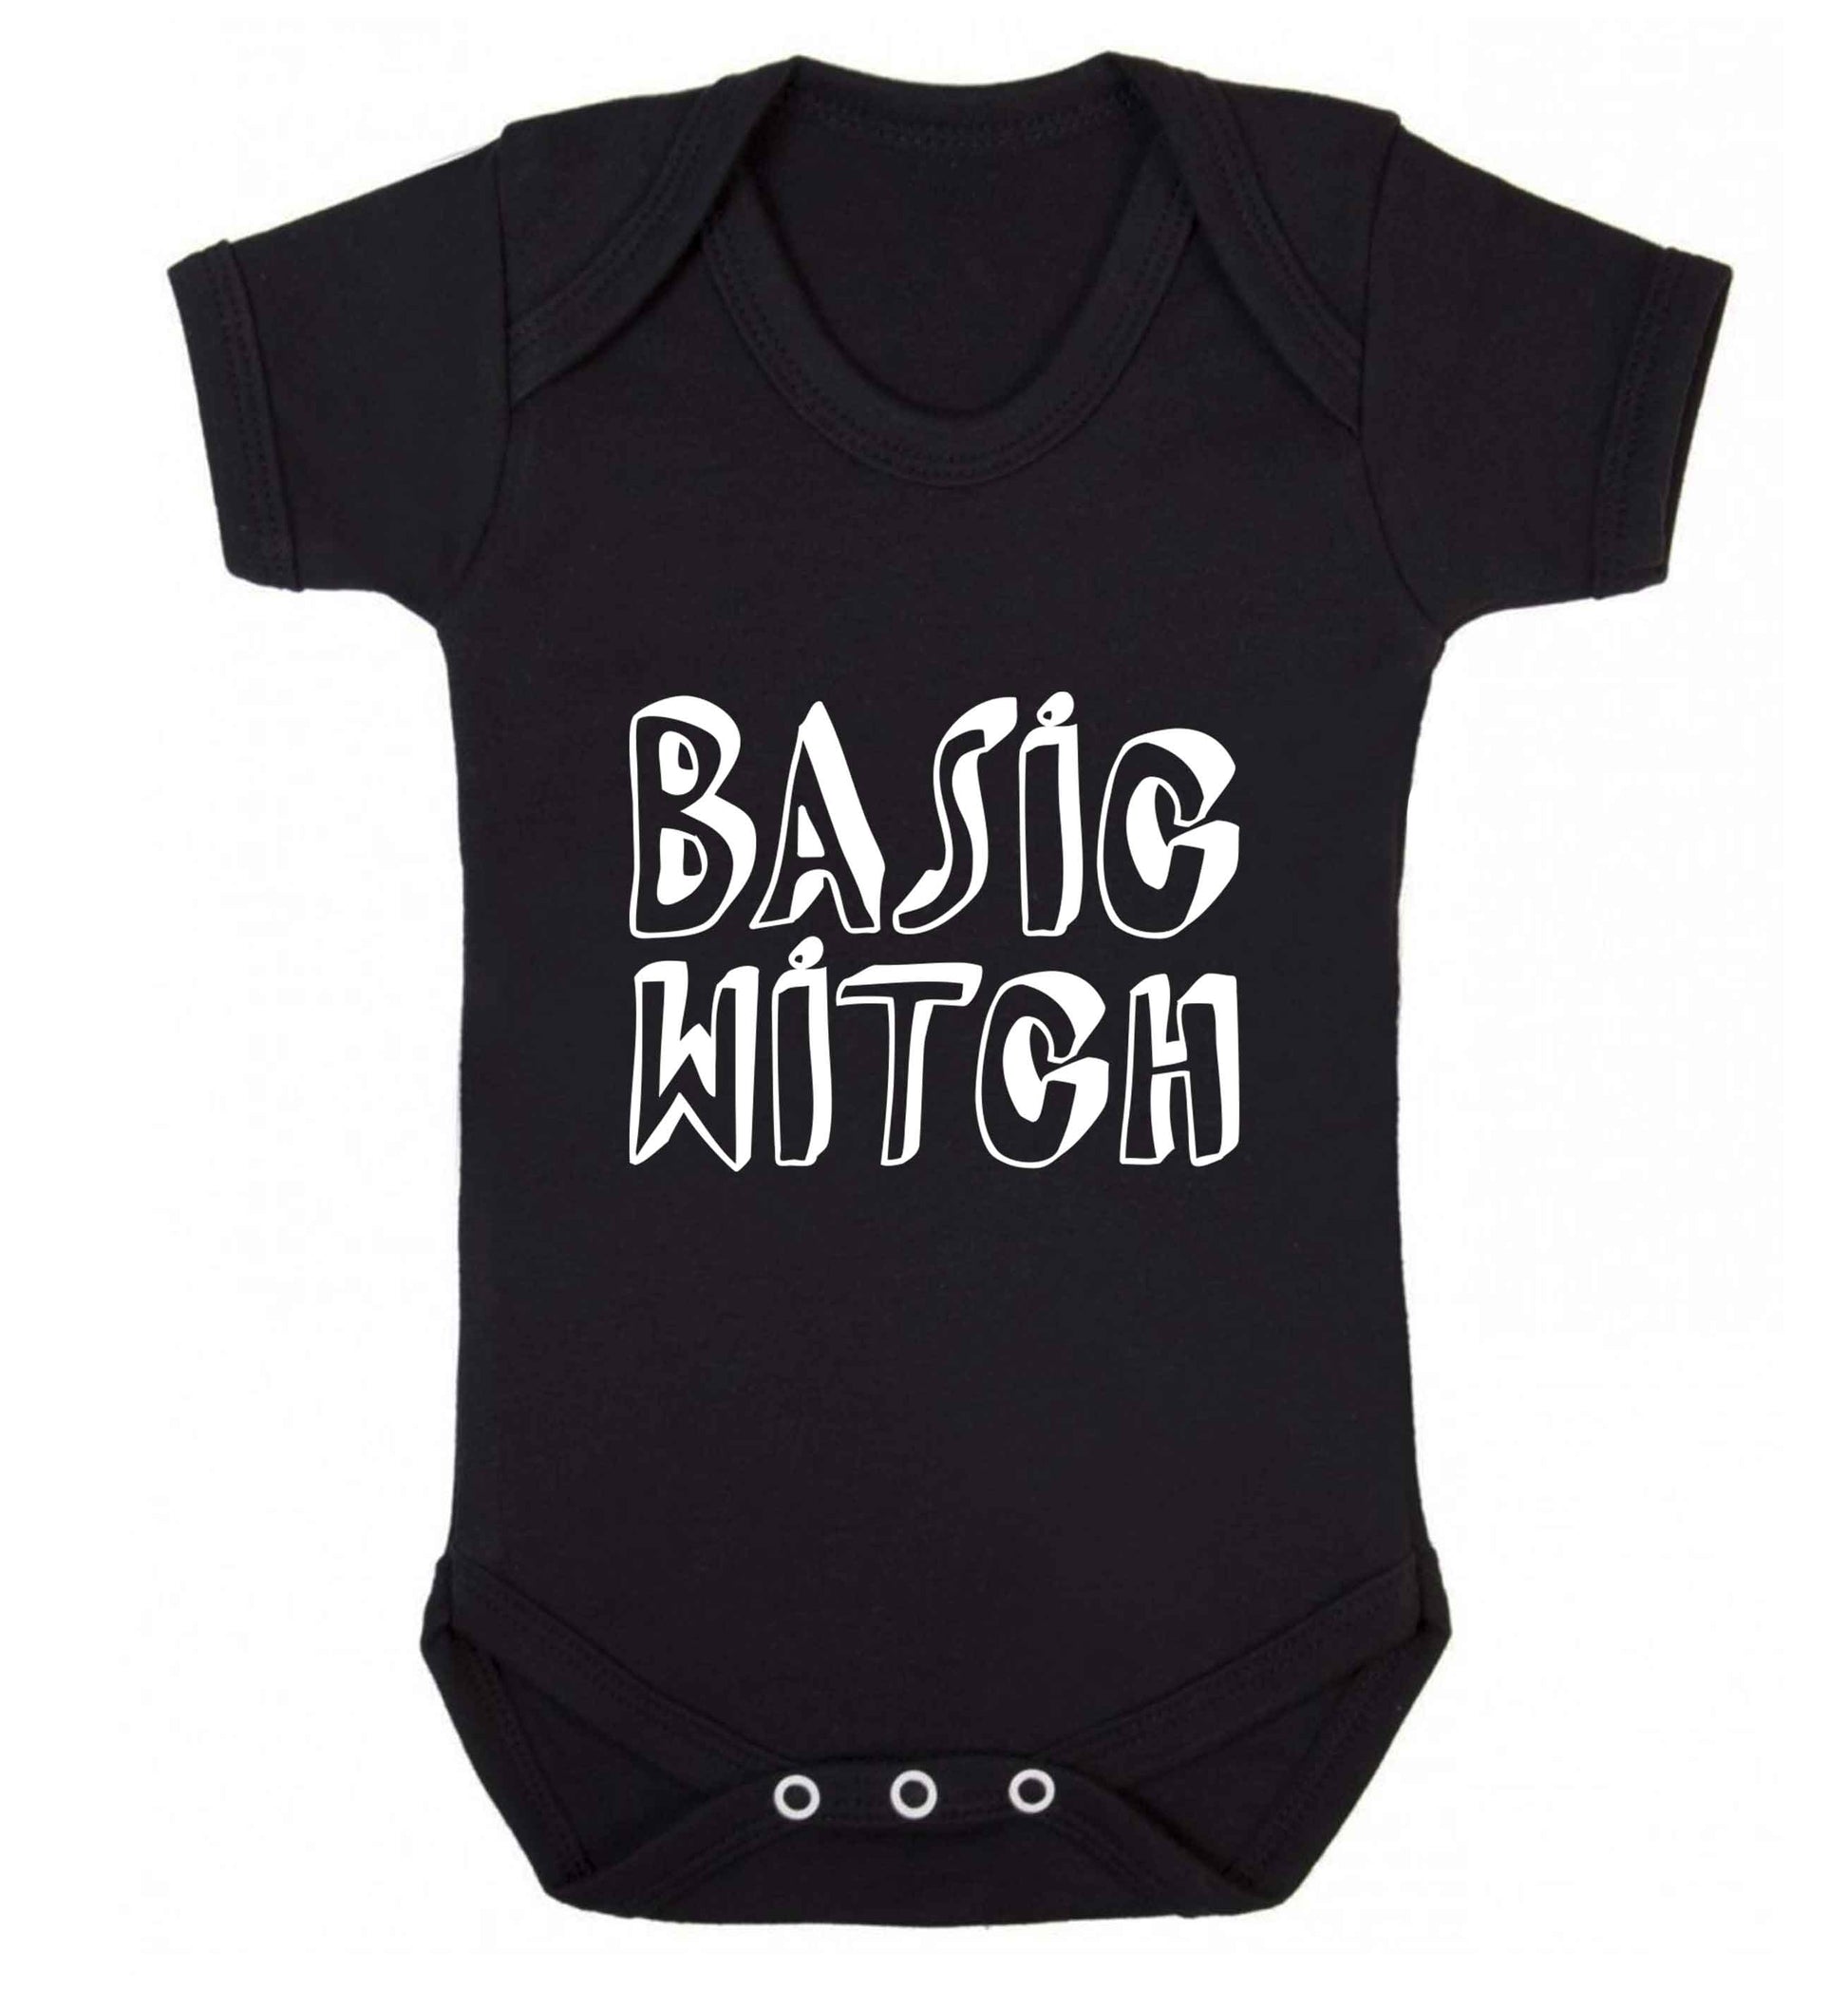 Basic witch baby vest black 18-24 months